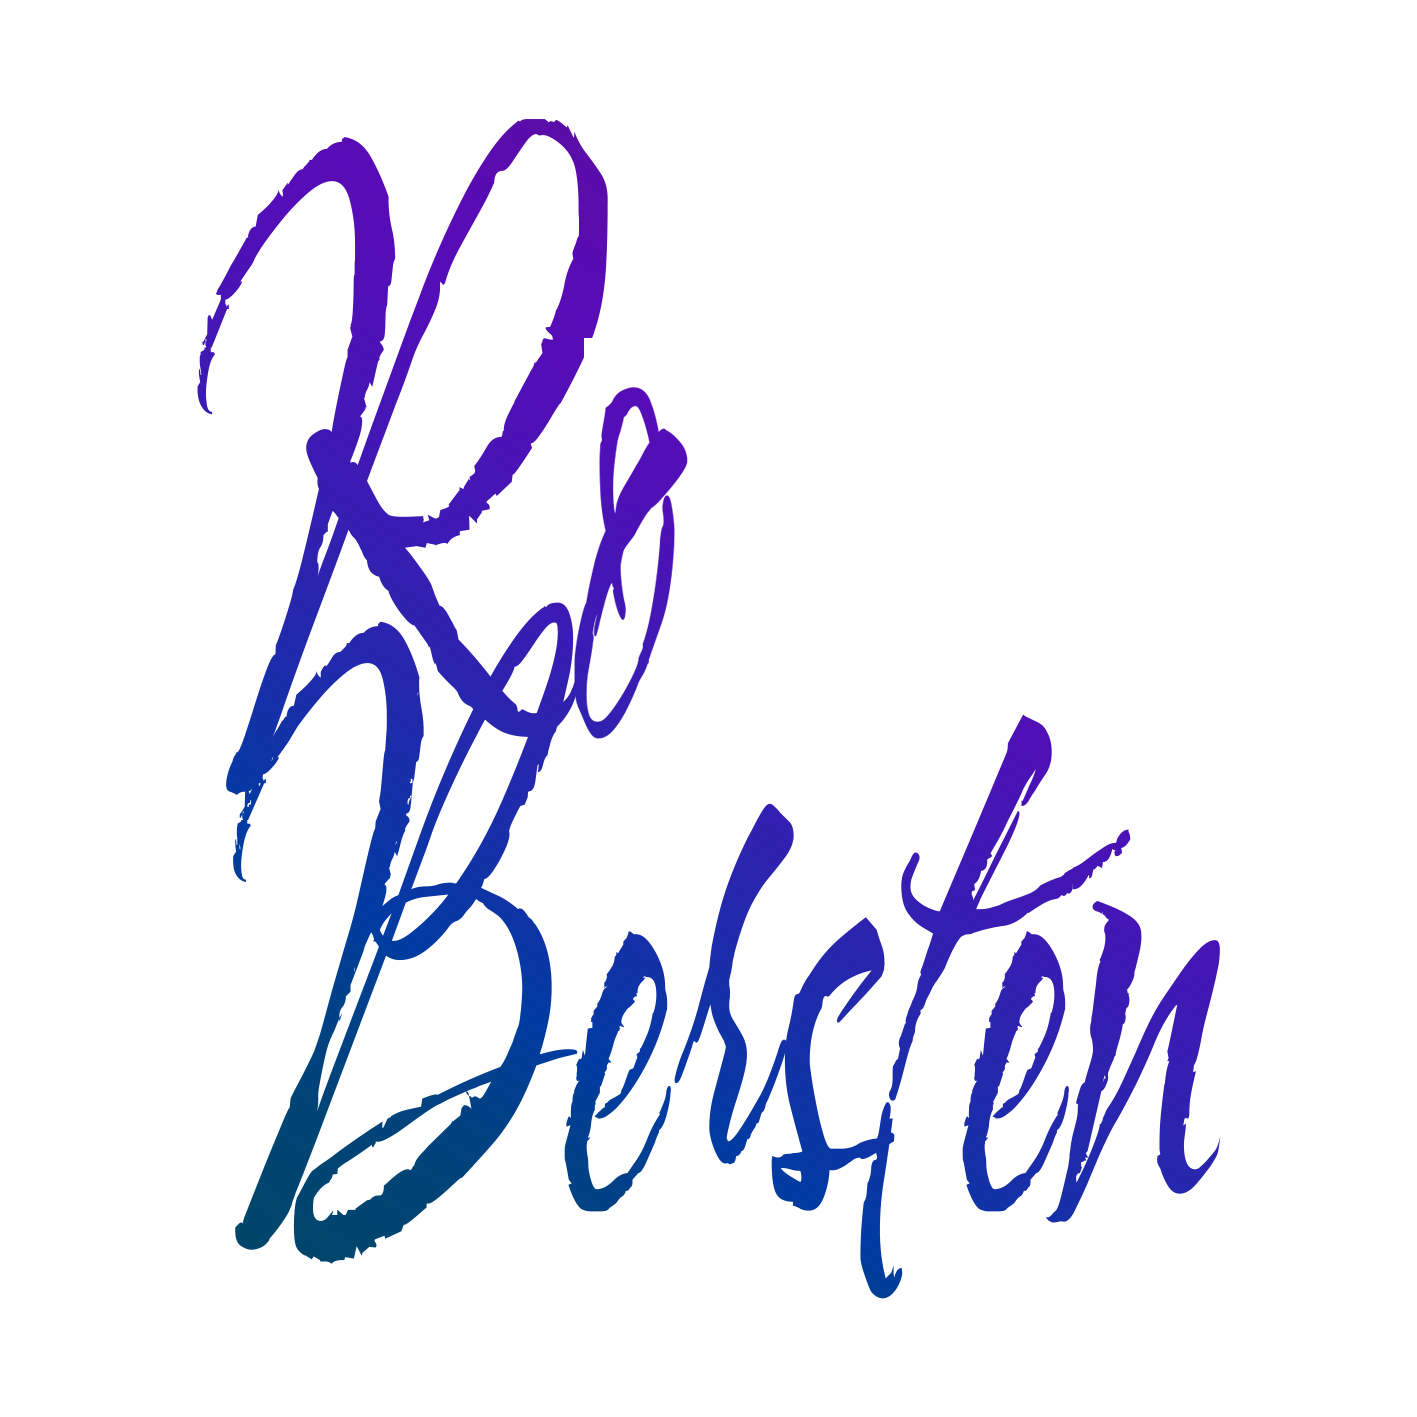 Ro Bersten, strategist, communicator, advocate